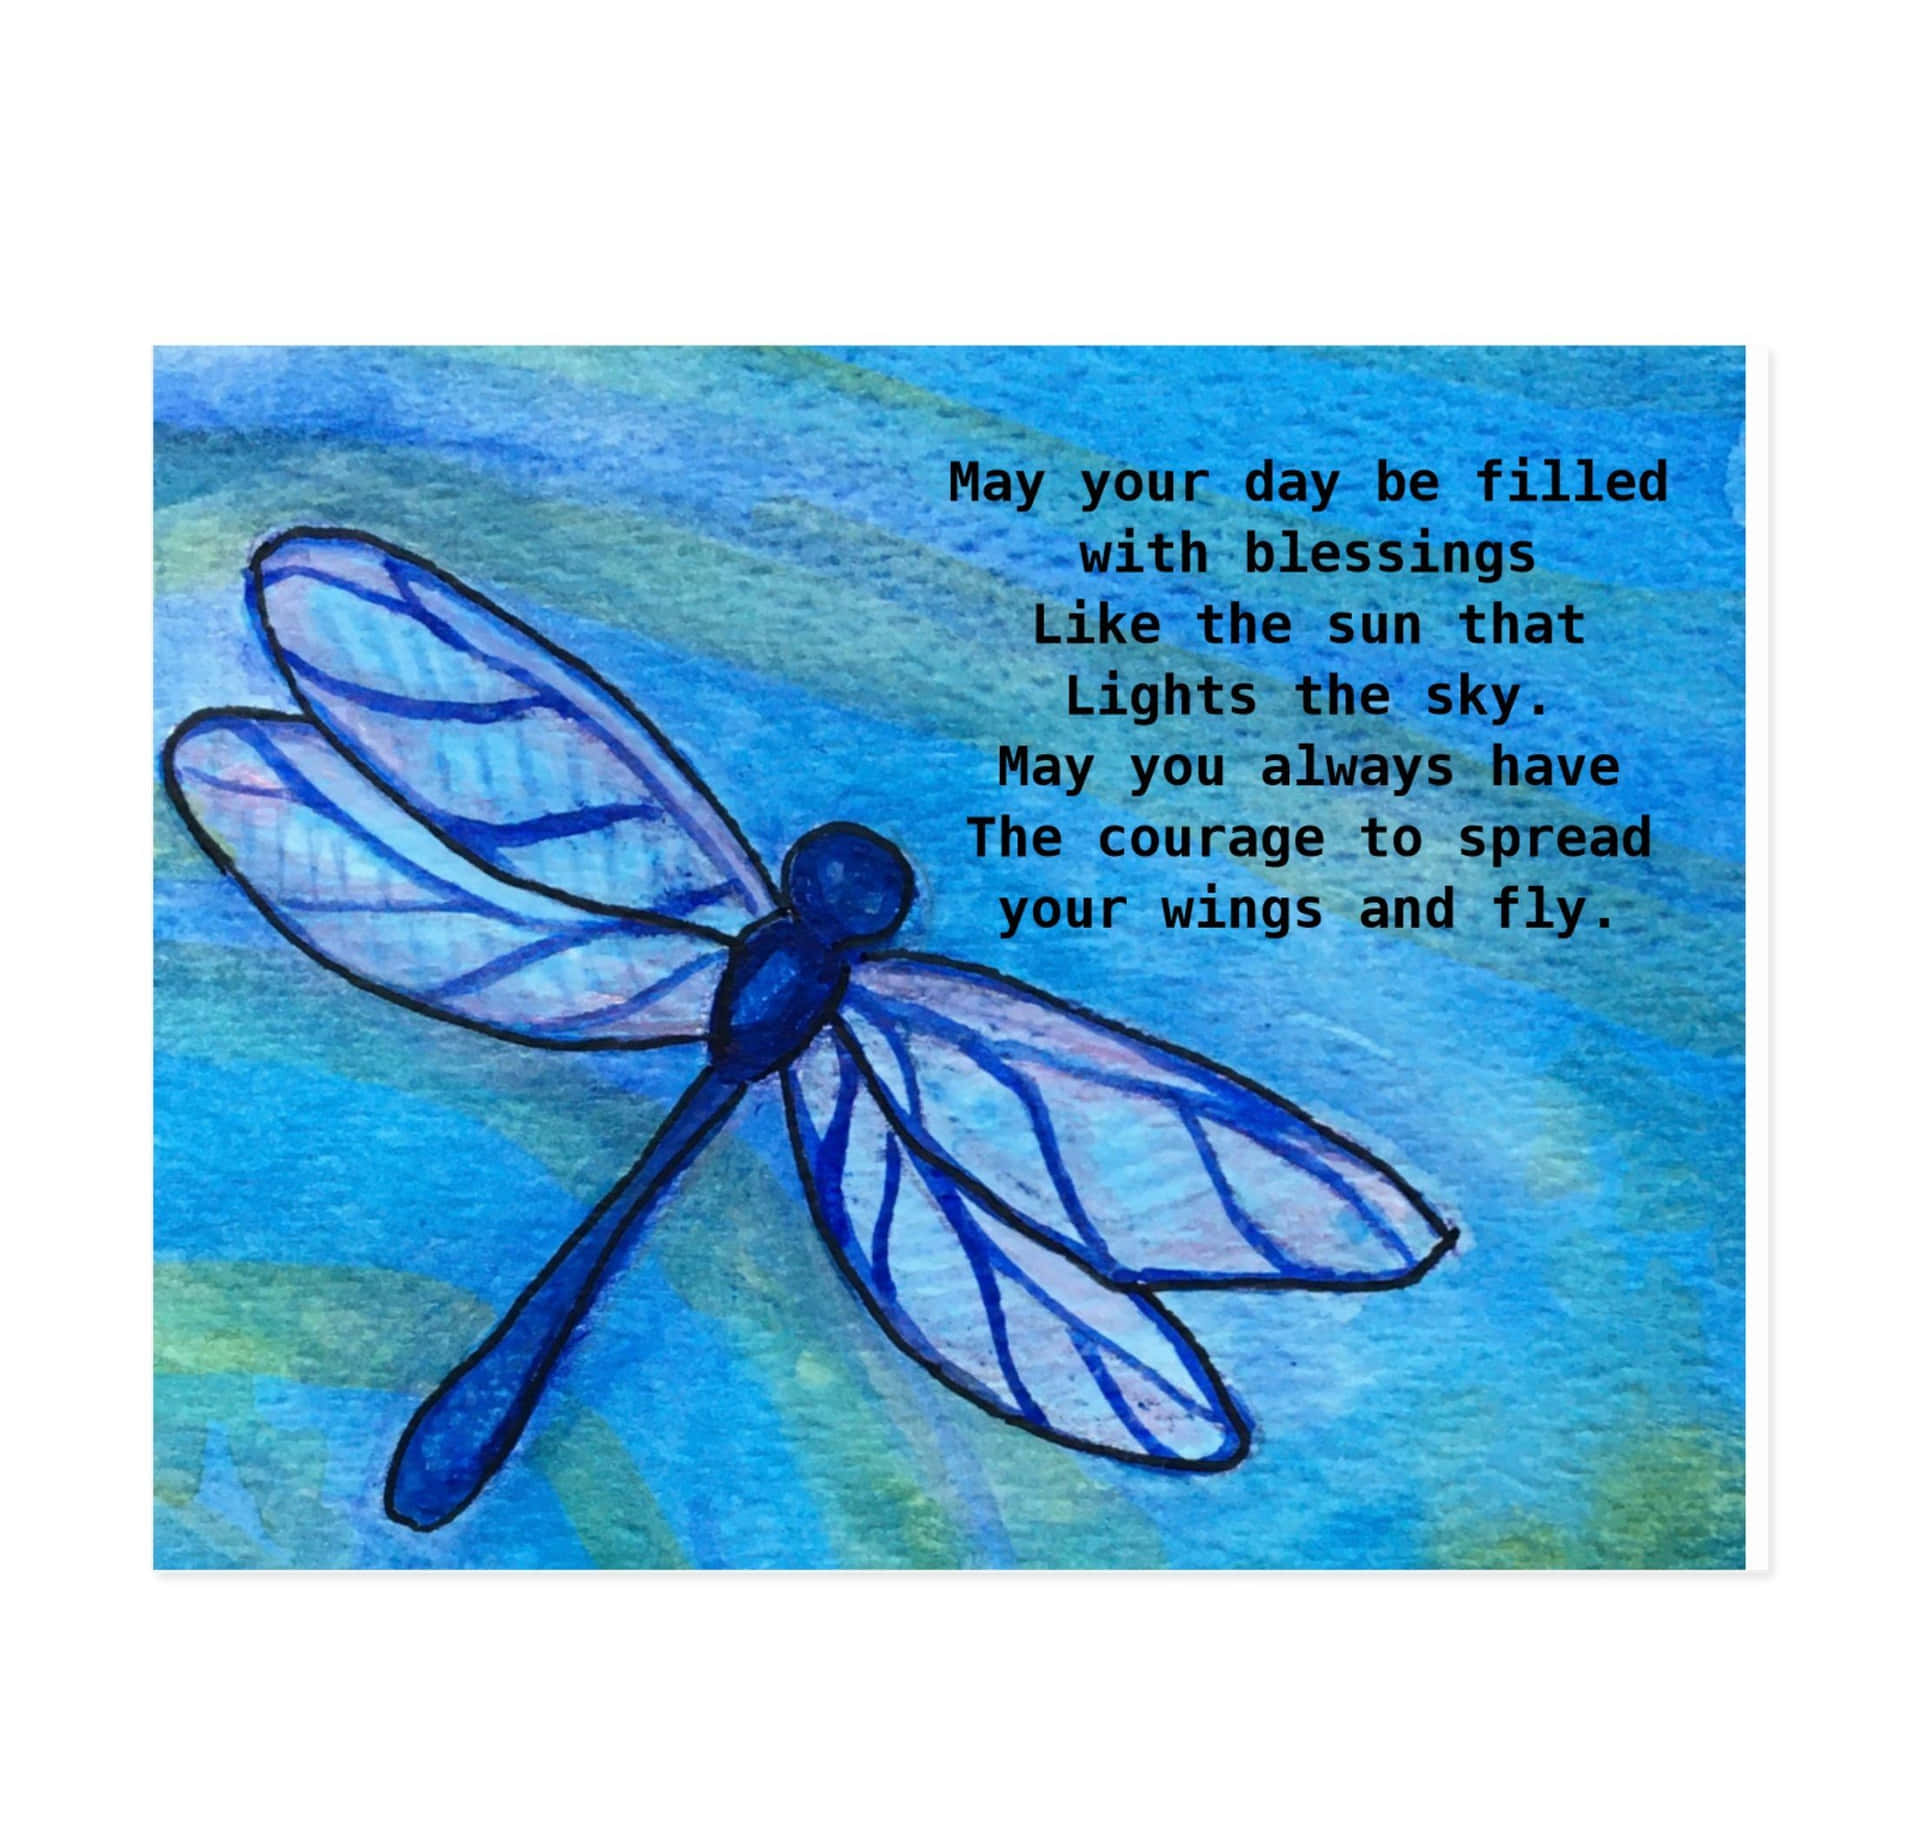 A Blue Dragonfly Flies Through a Brilliant Blue Sky Wallpaper